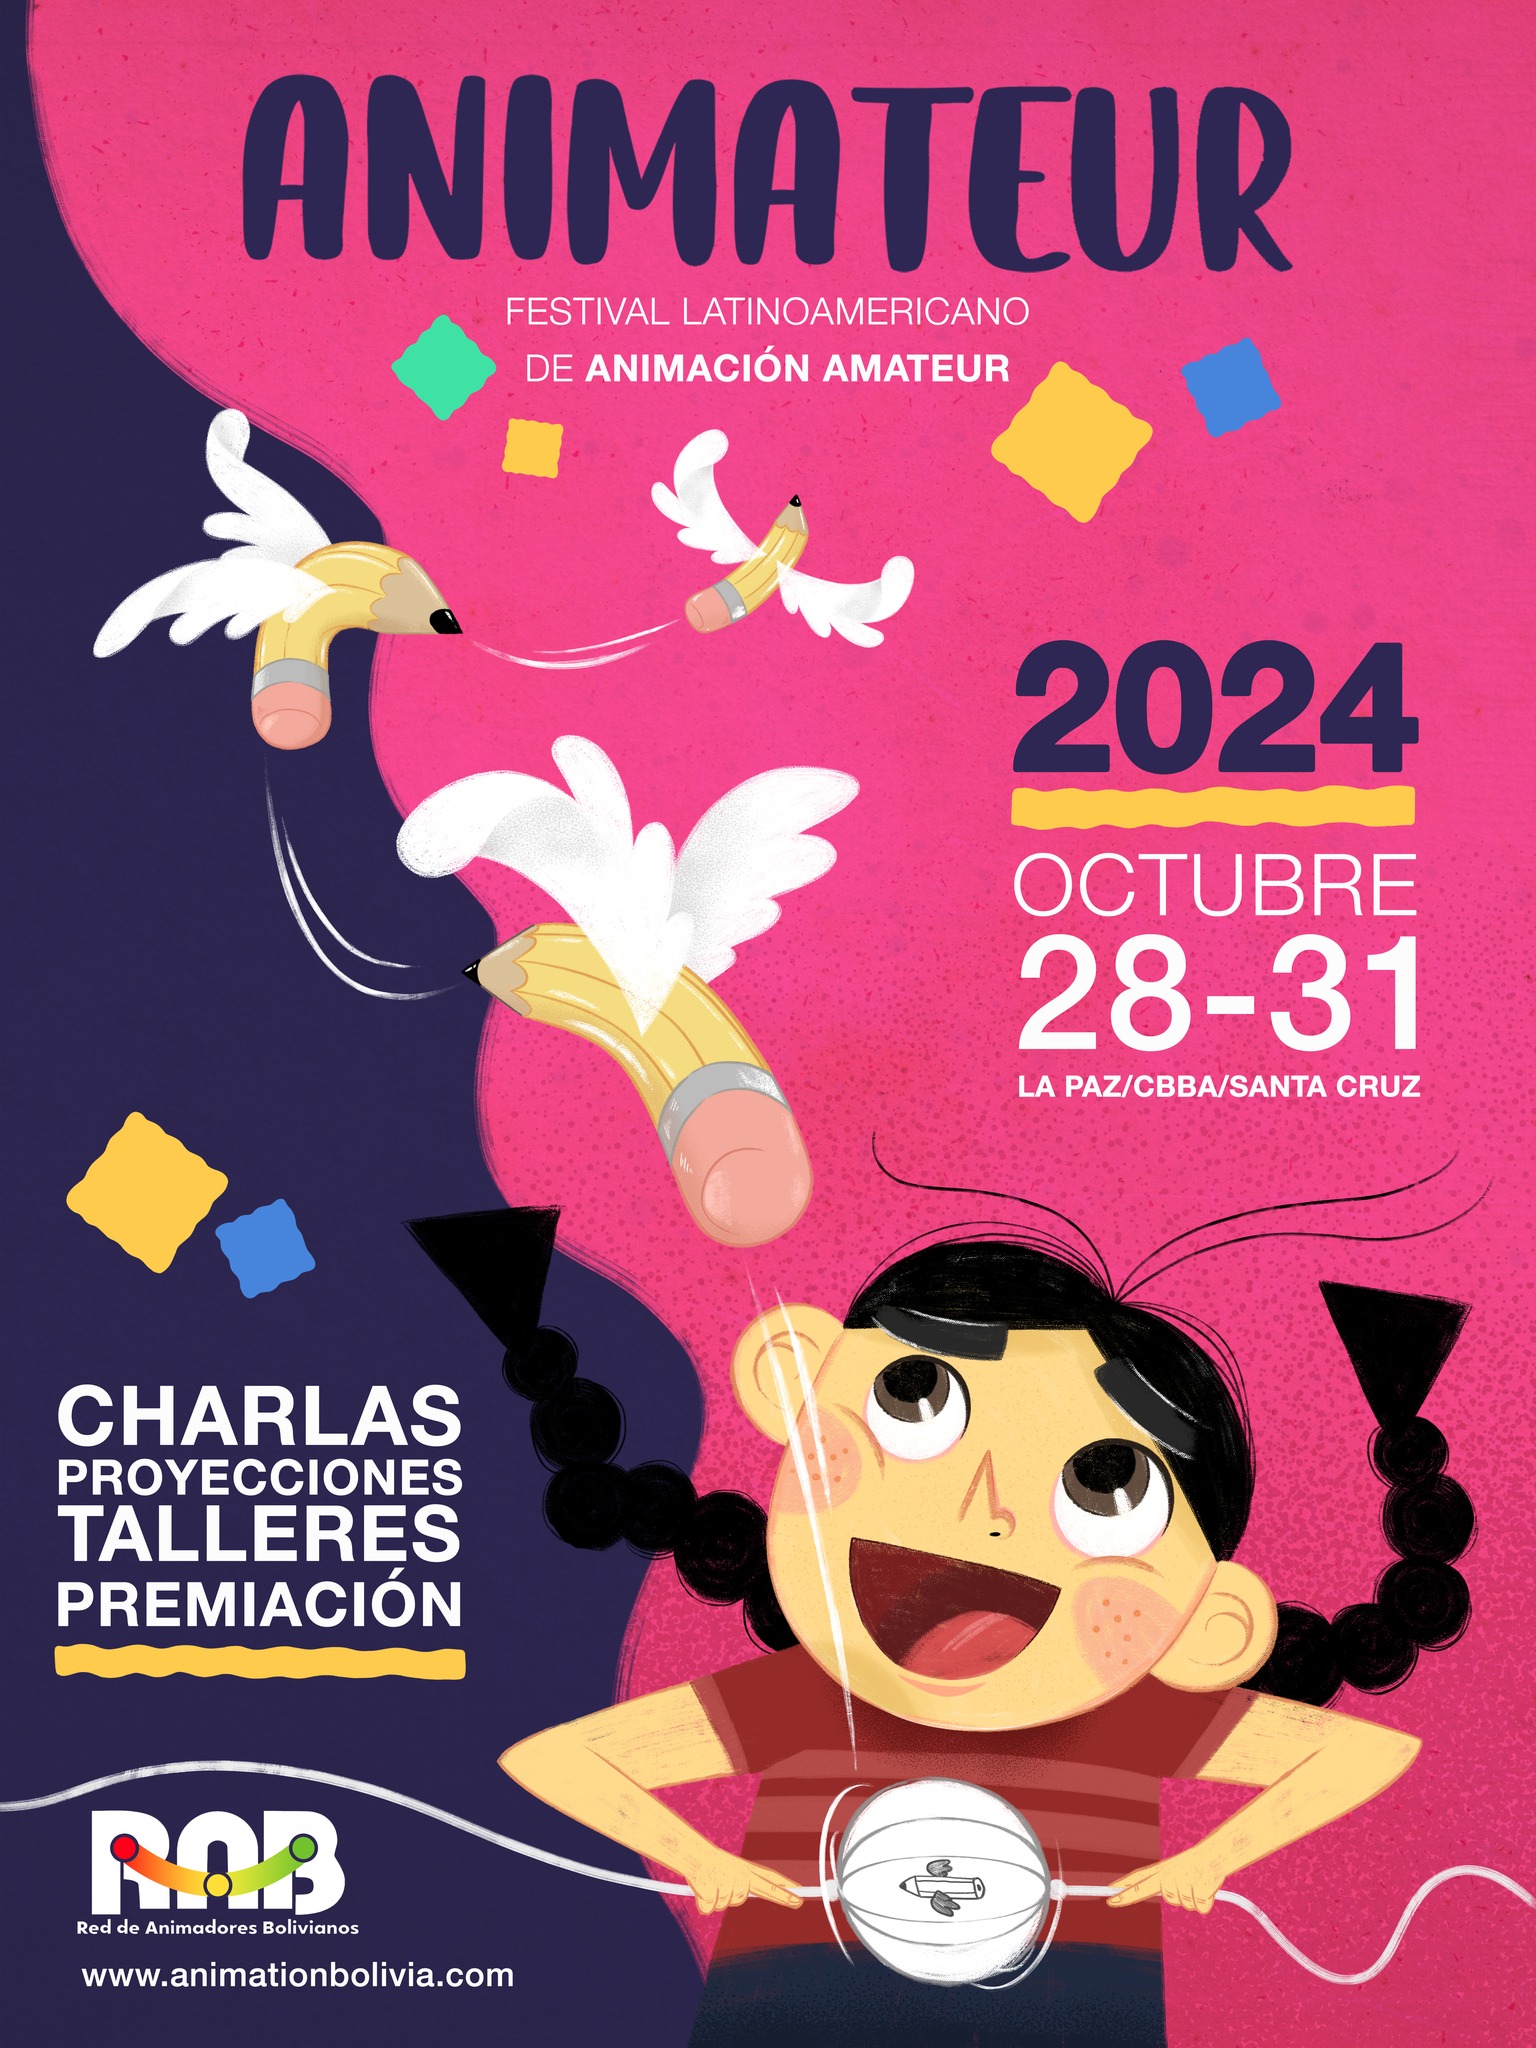 Festival de Animación Amateur Animateur 2024 Red de Animadores Bolivianos RAB Bolivia póster